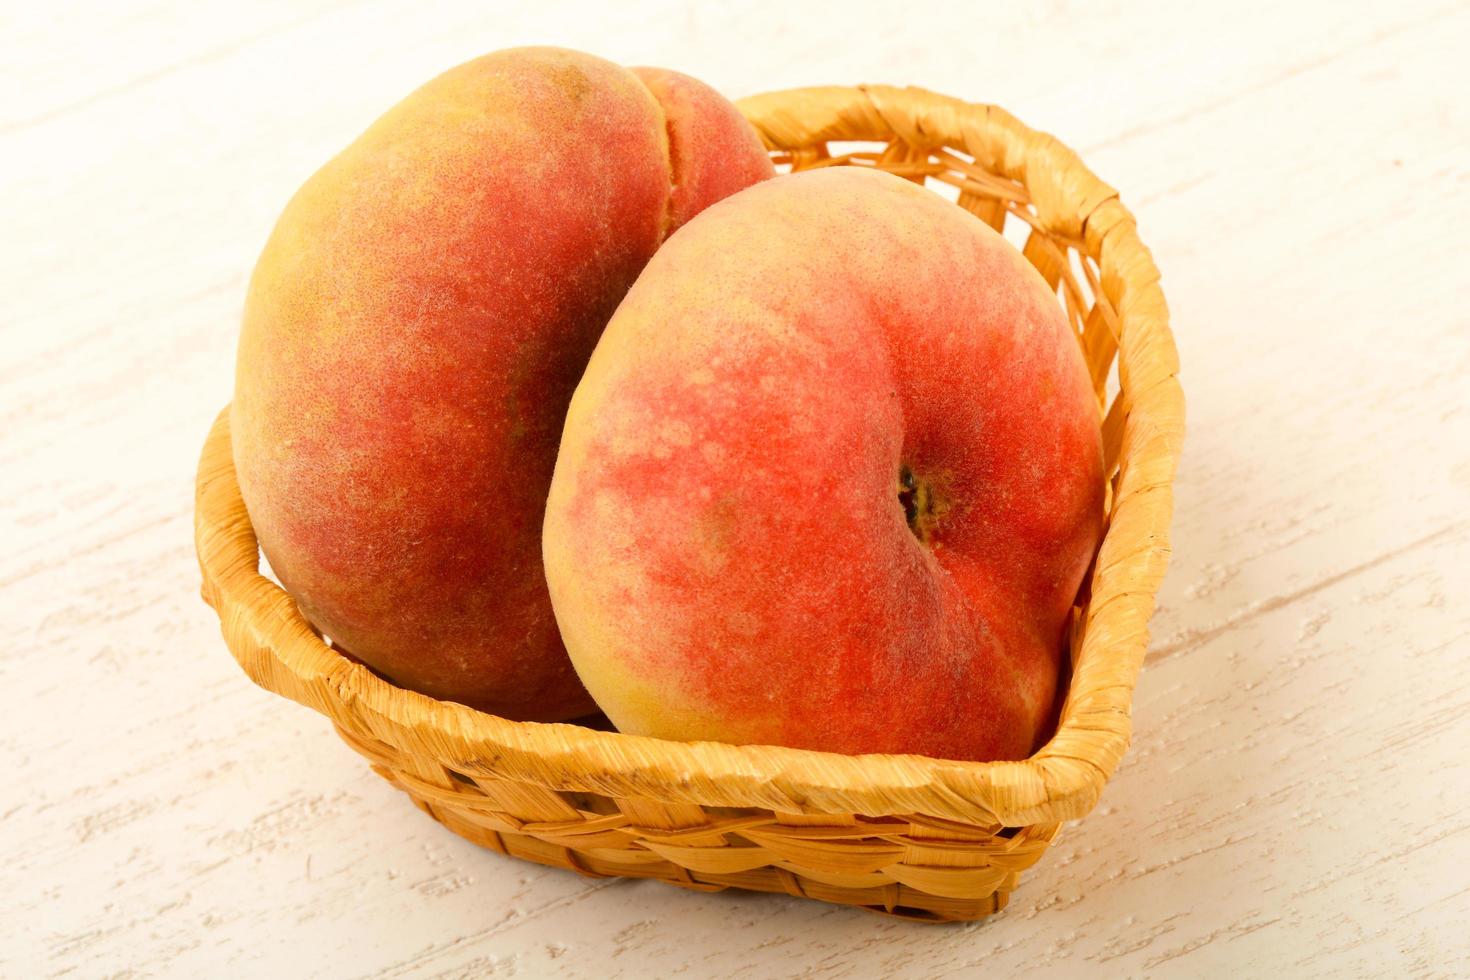 ljuv persikor i en korg på trä- bakgrund foto